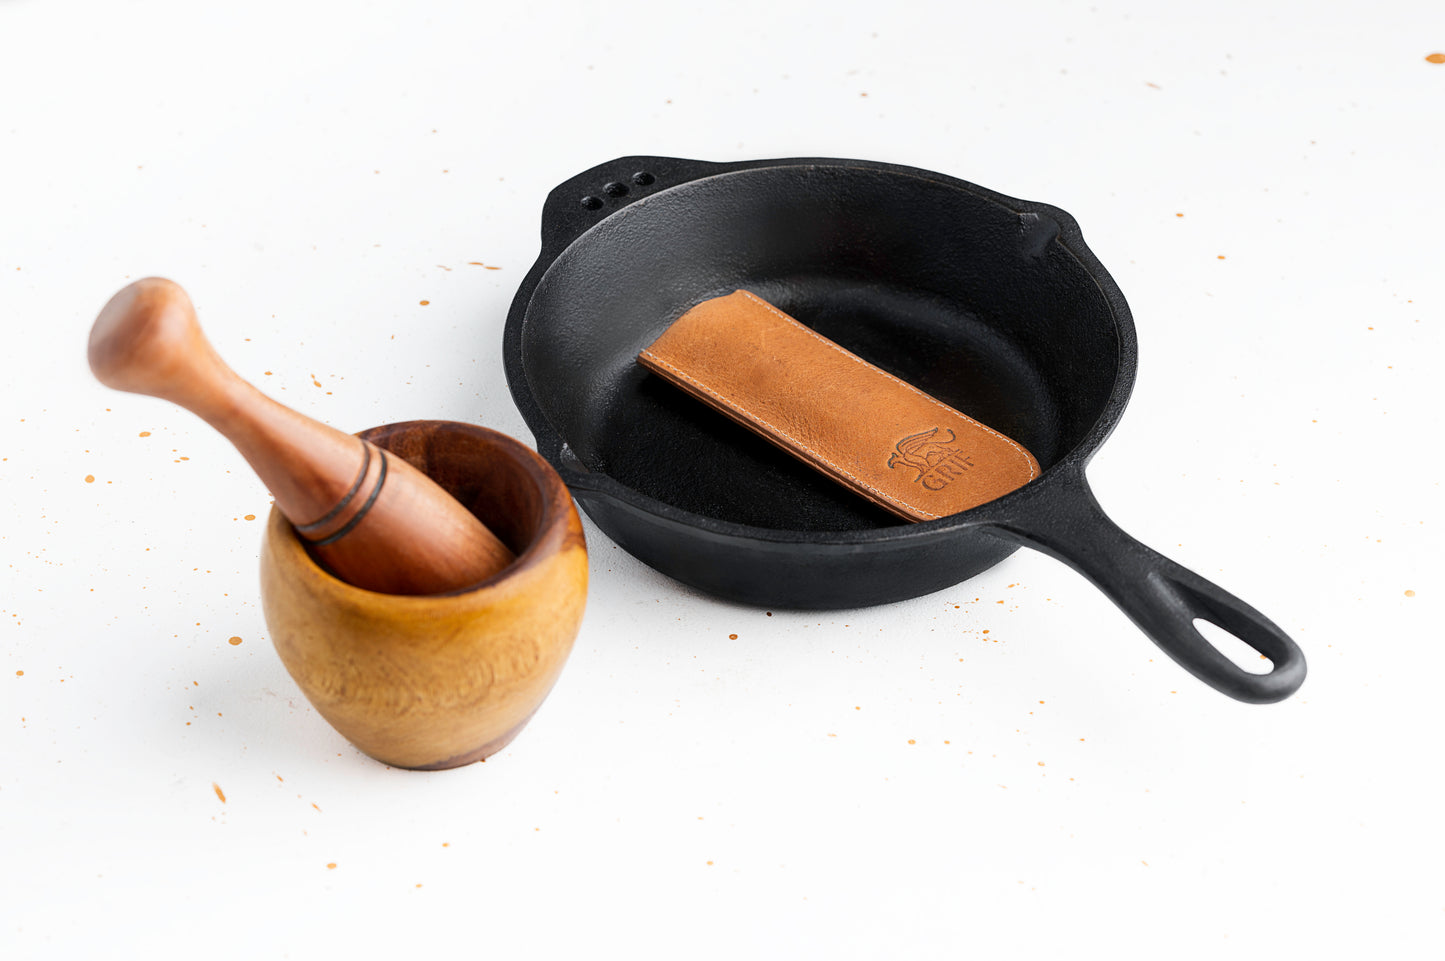 15 CM COPPER SAUCE PAN – Grif Cookware